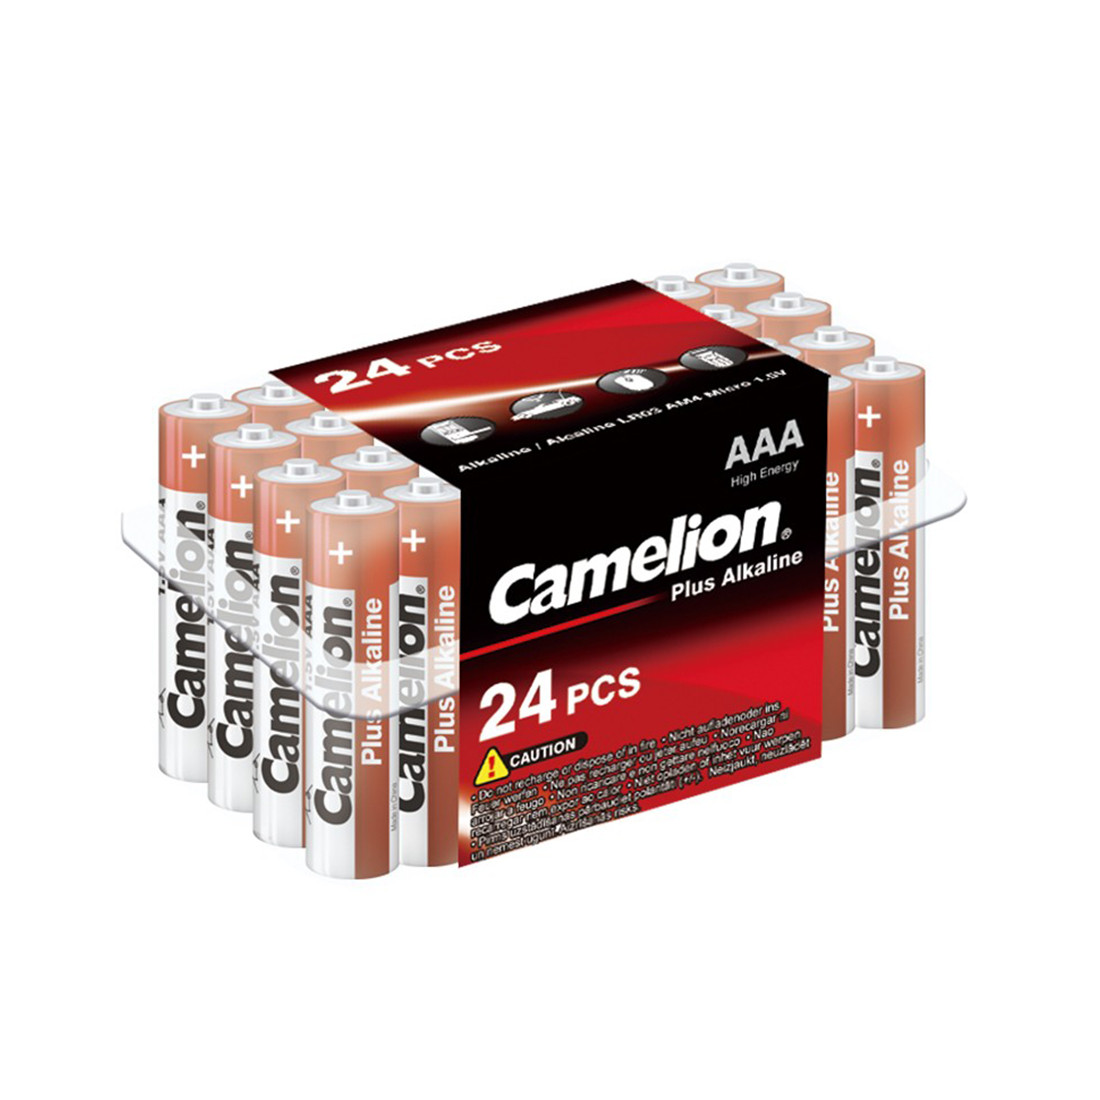 Батарейка  CAMELION  LR03-PB24  Plus Alkaline  AAA  1.5V  1250 mAh  24 шт.  Пластиковый кейс